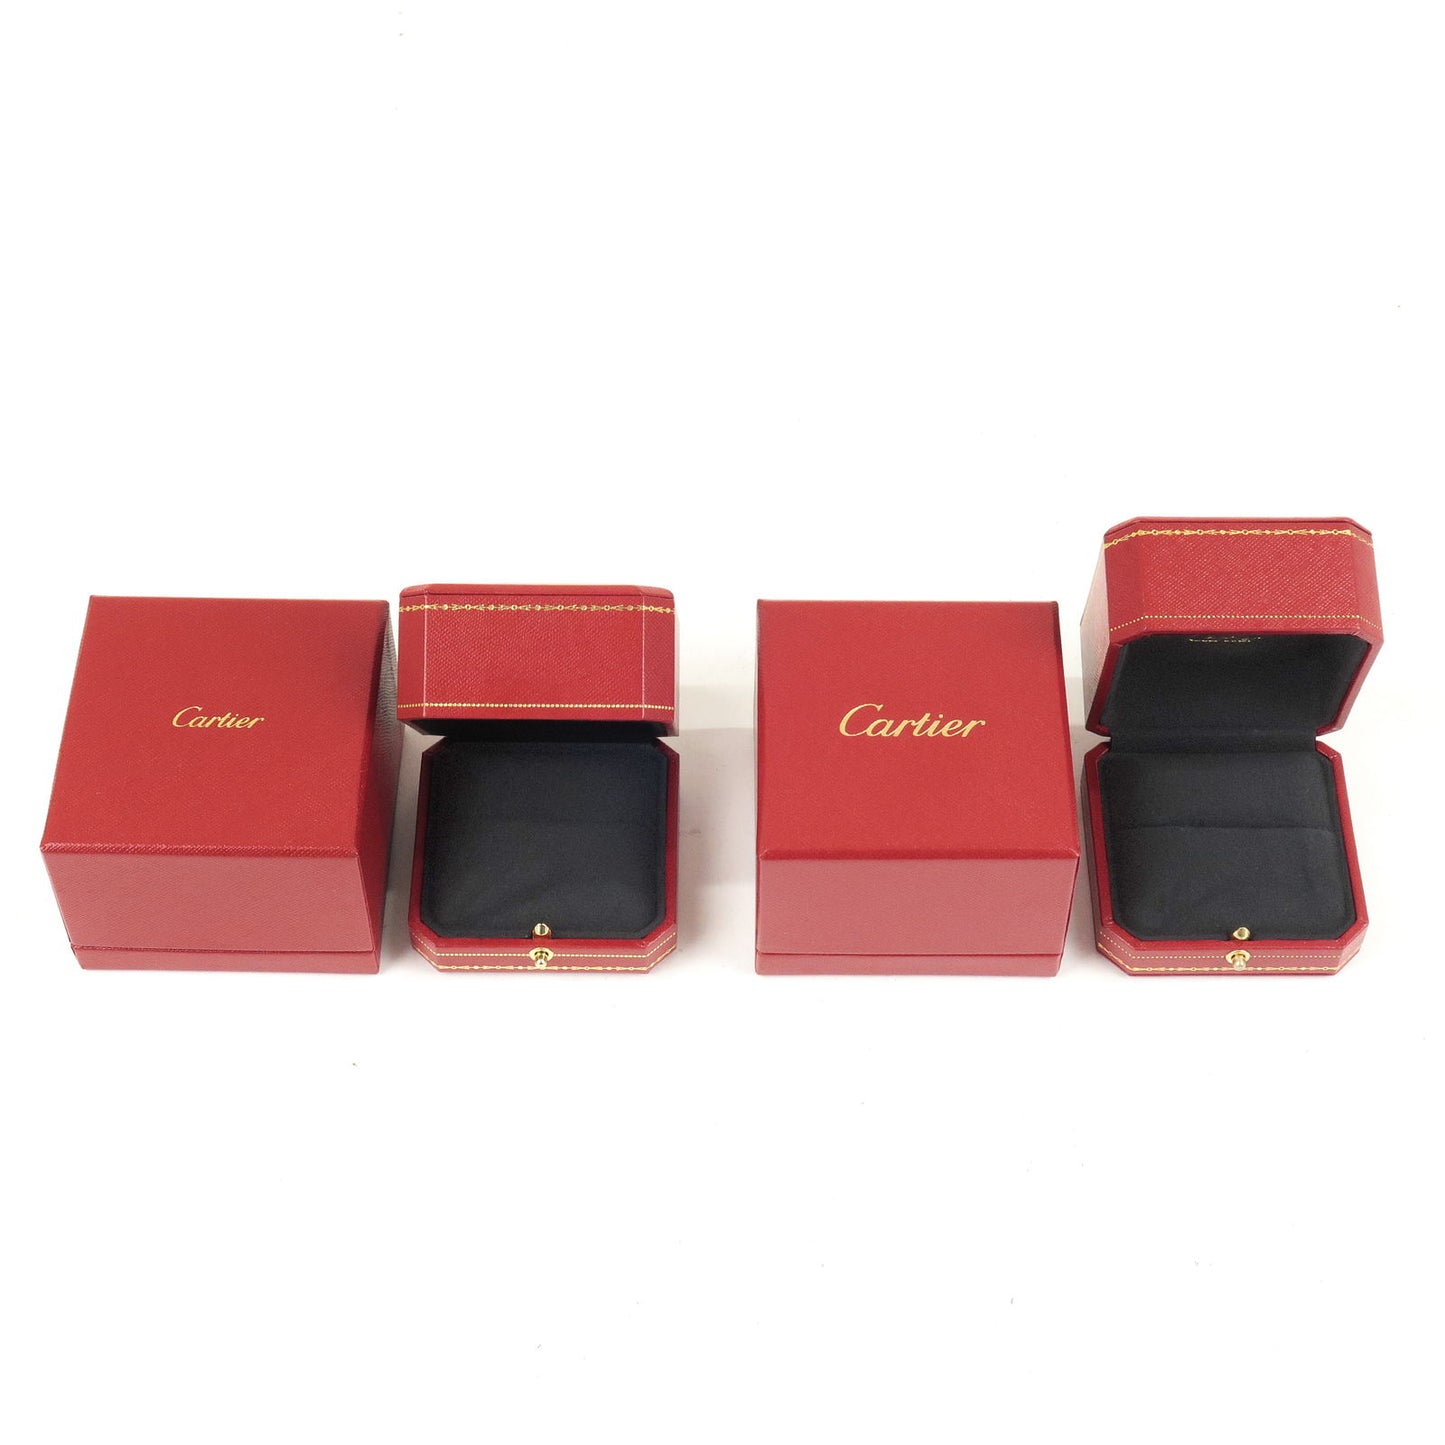 Cartier-Set-of-2-Jewelry-Box-Ring-Box-Jewelry-Box-Red